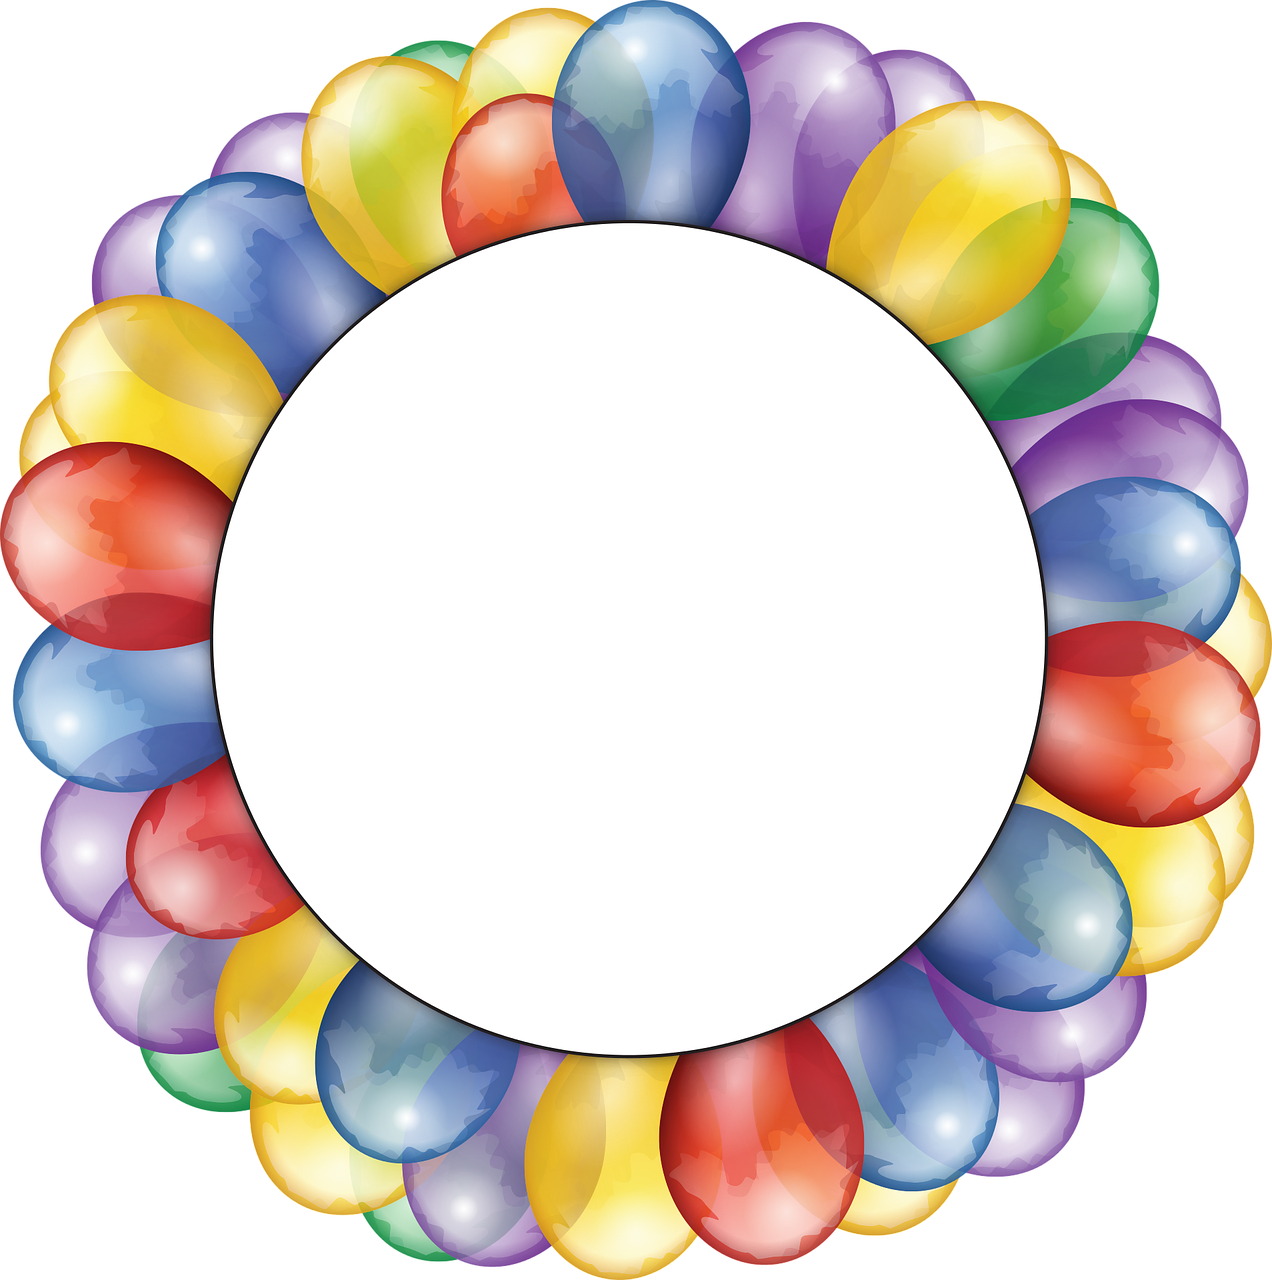 balloons circle frame free photo